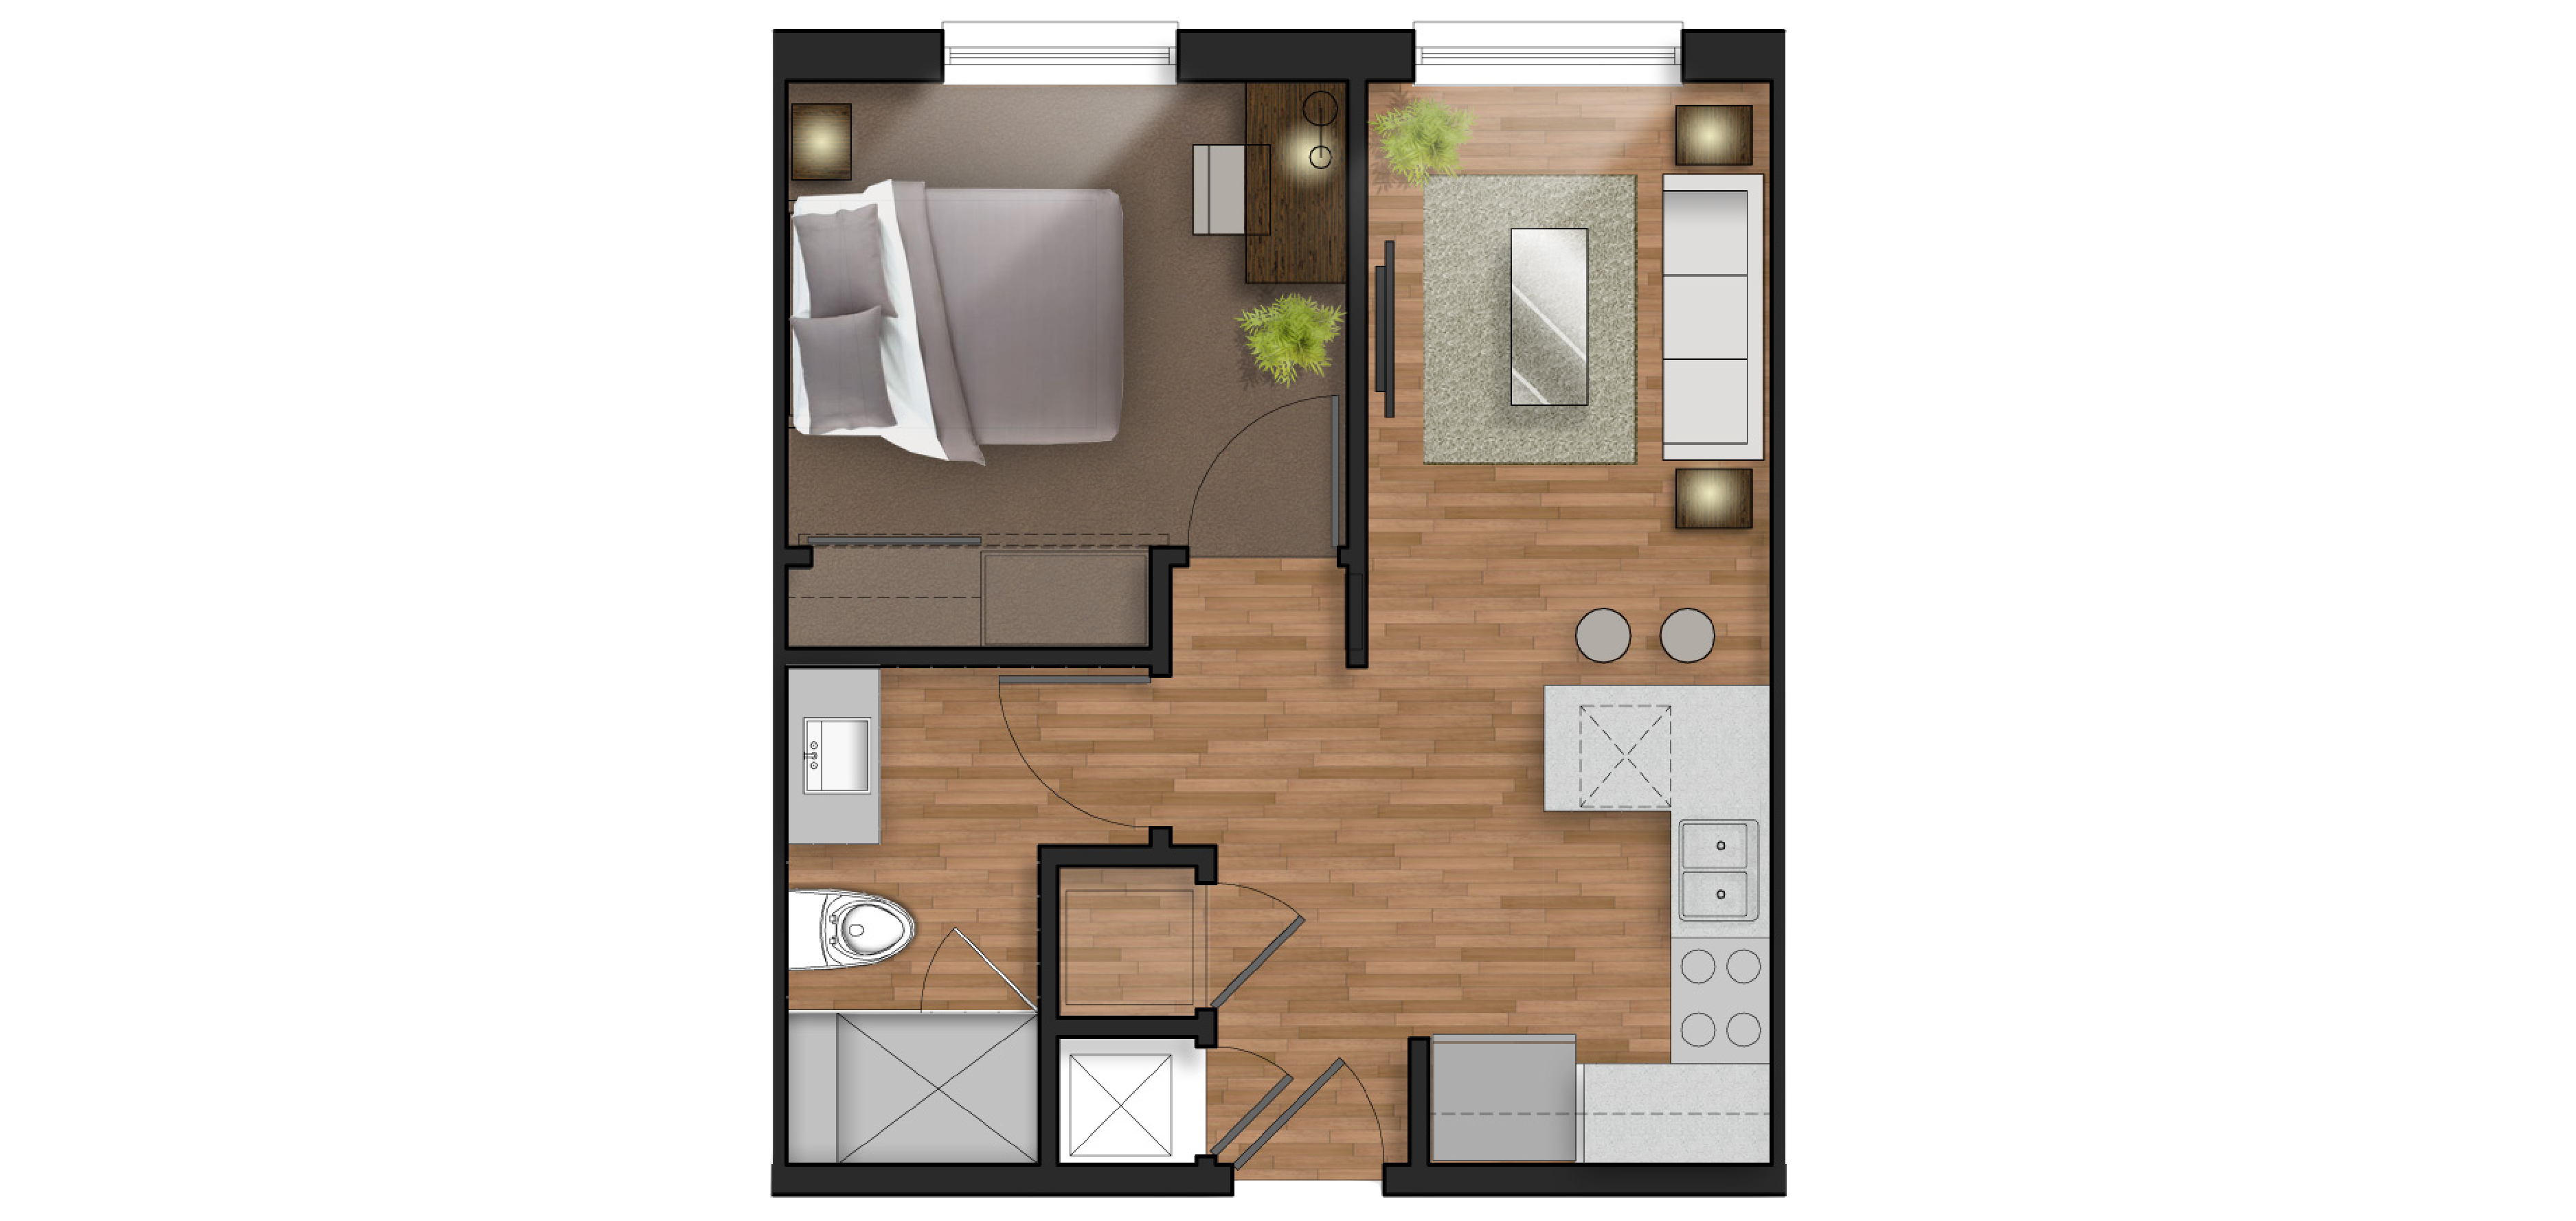 1 bedroom student apartment